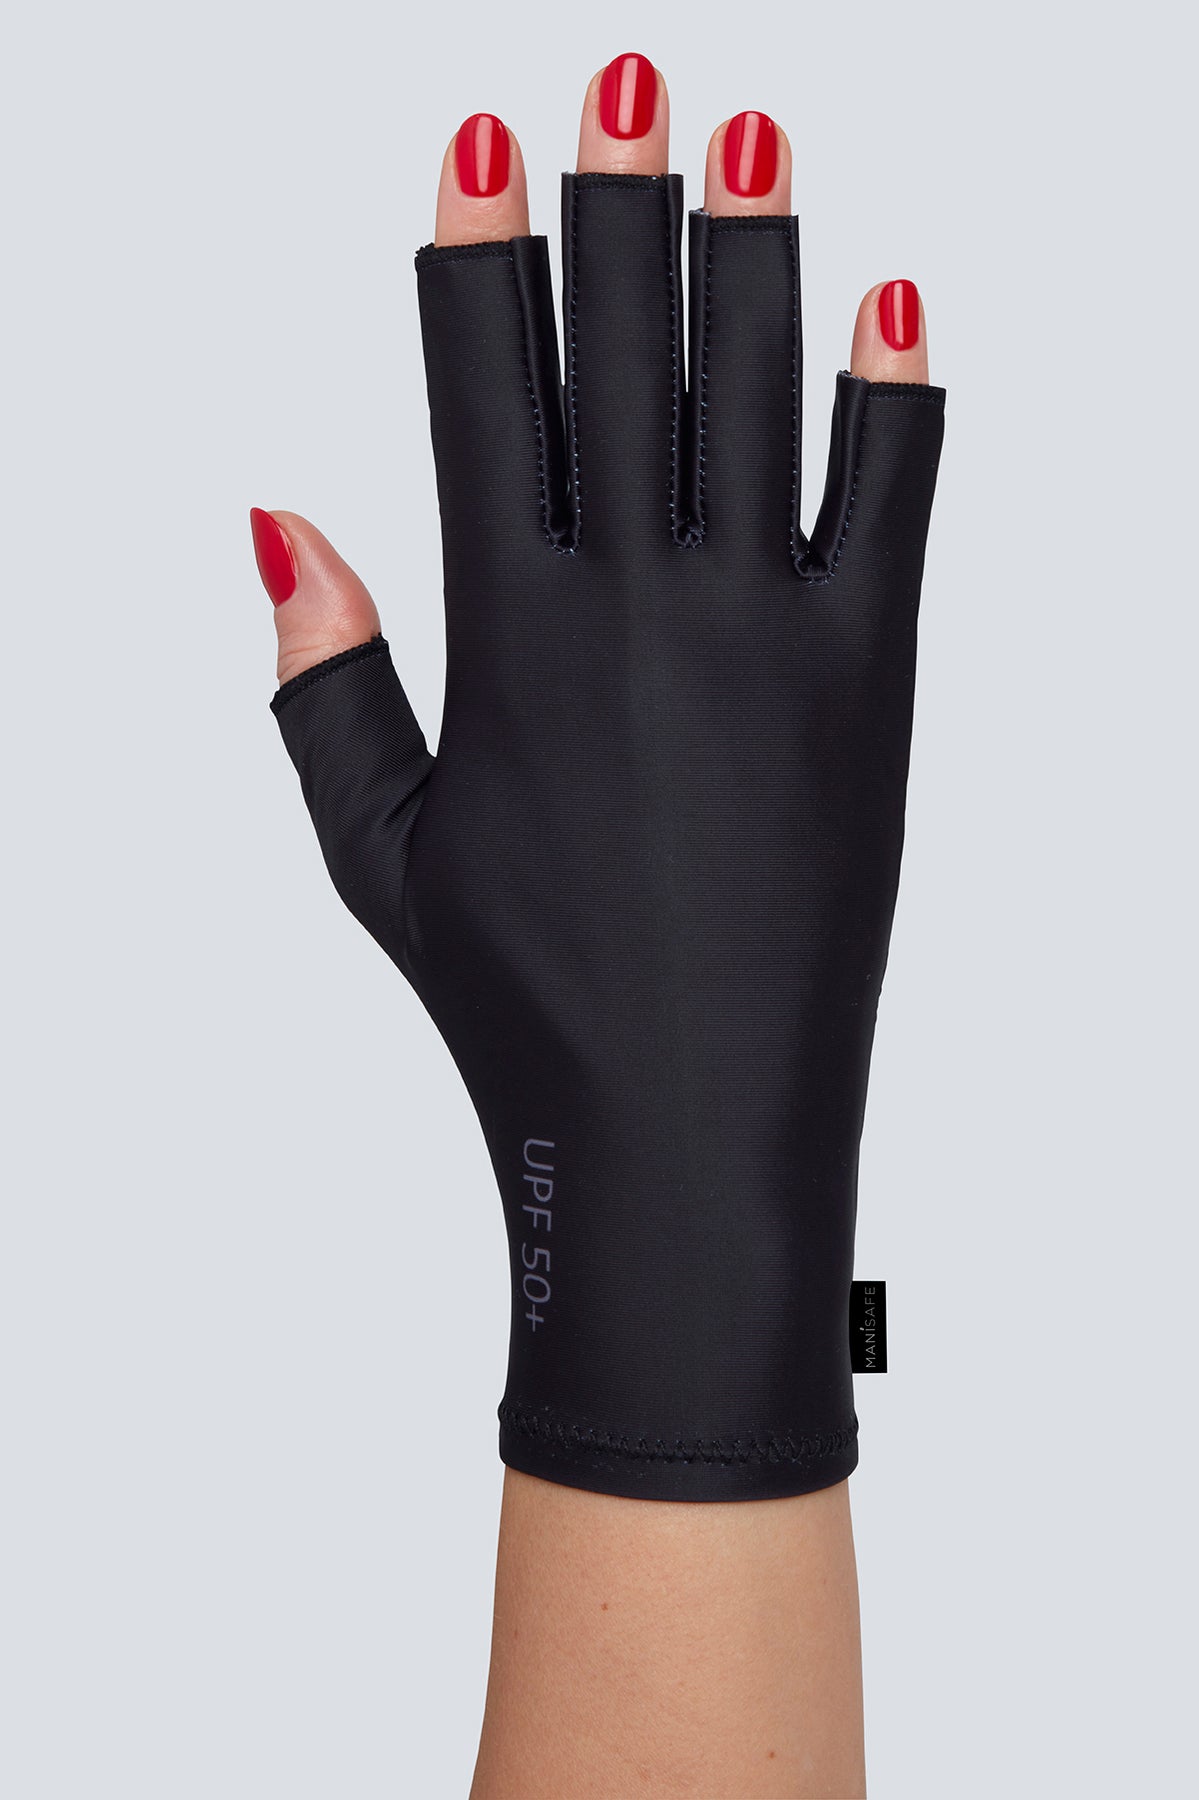 Saviland U V Gloves for Nails - 4 Pairs UPF80+ High-tech